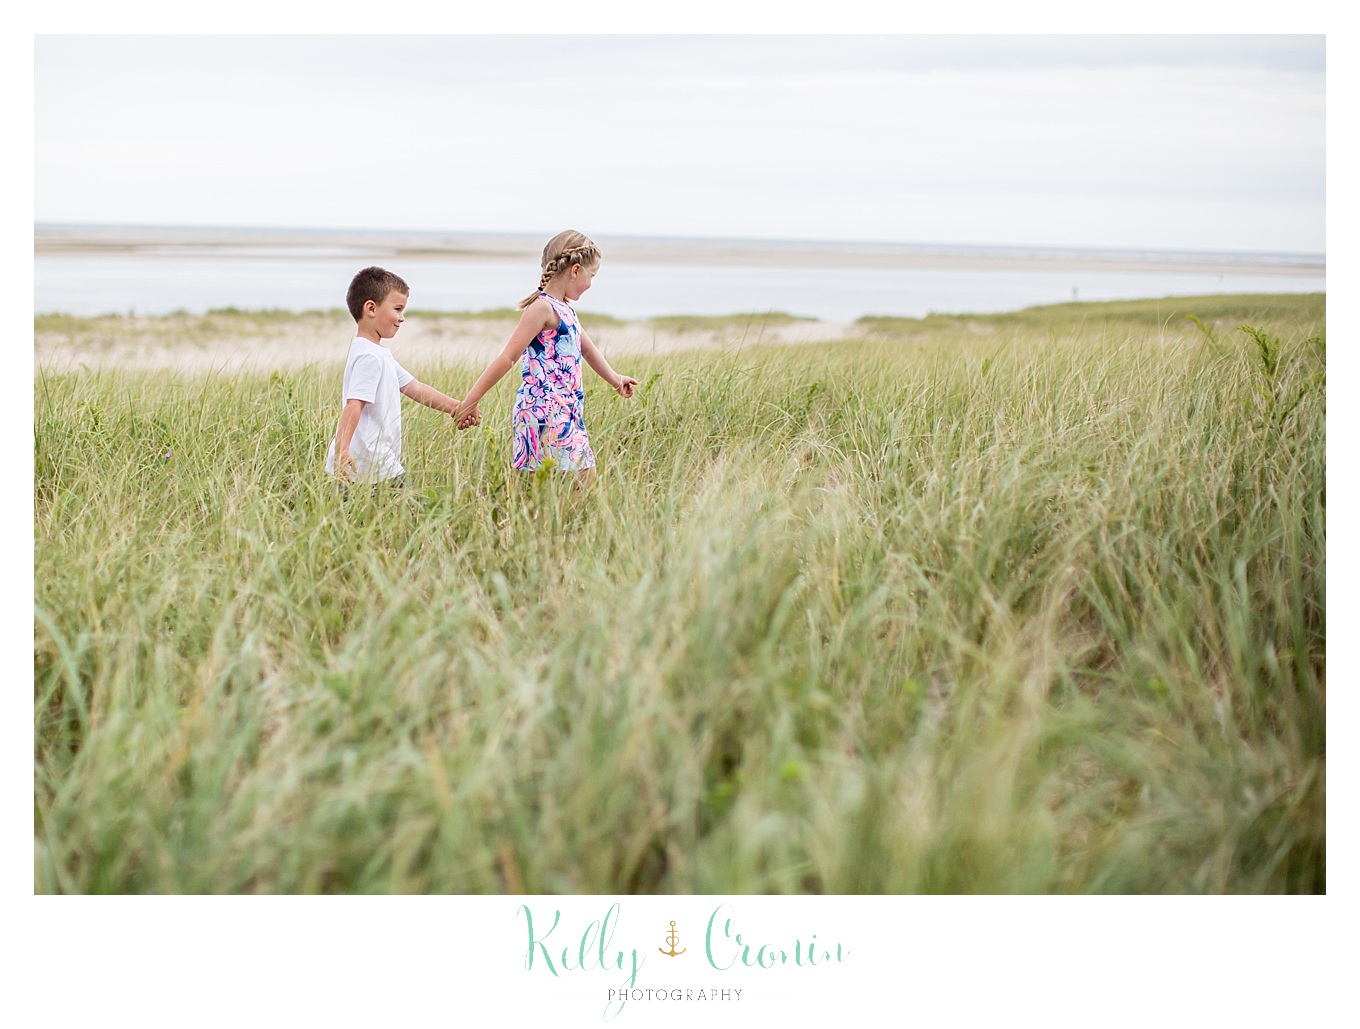 Mini Sessions On Cape Cod | Kelly Cronin